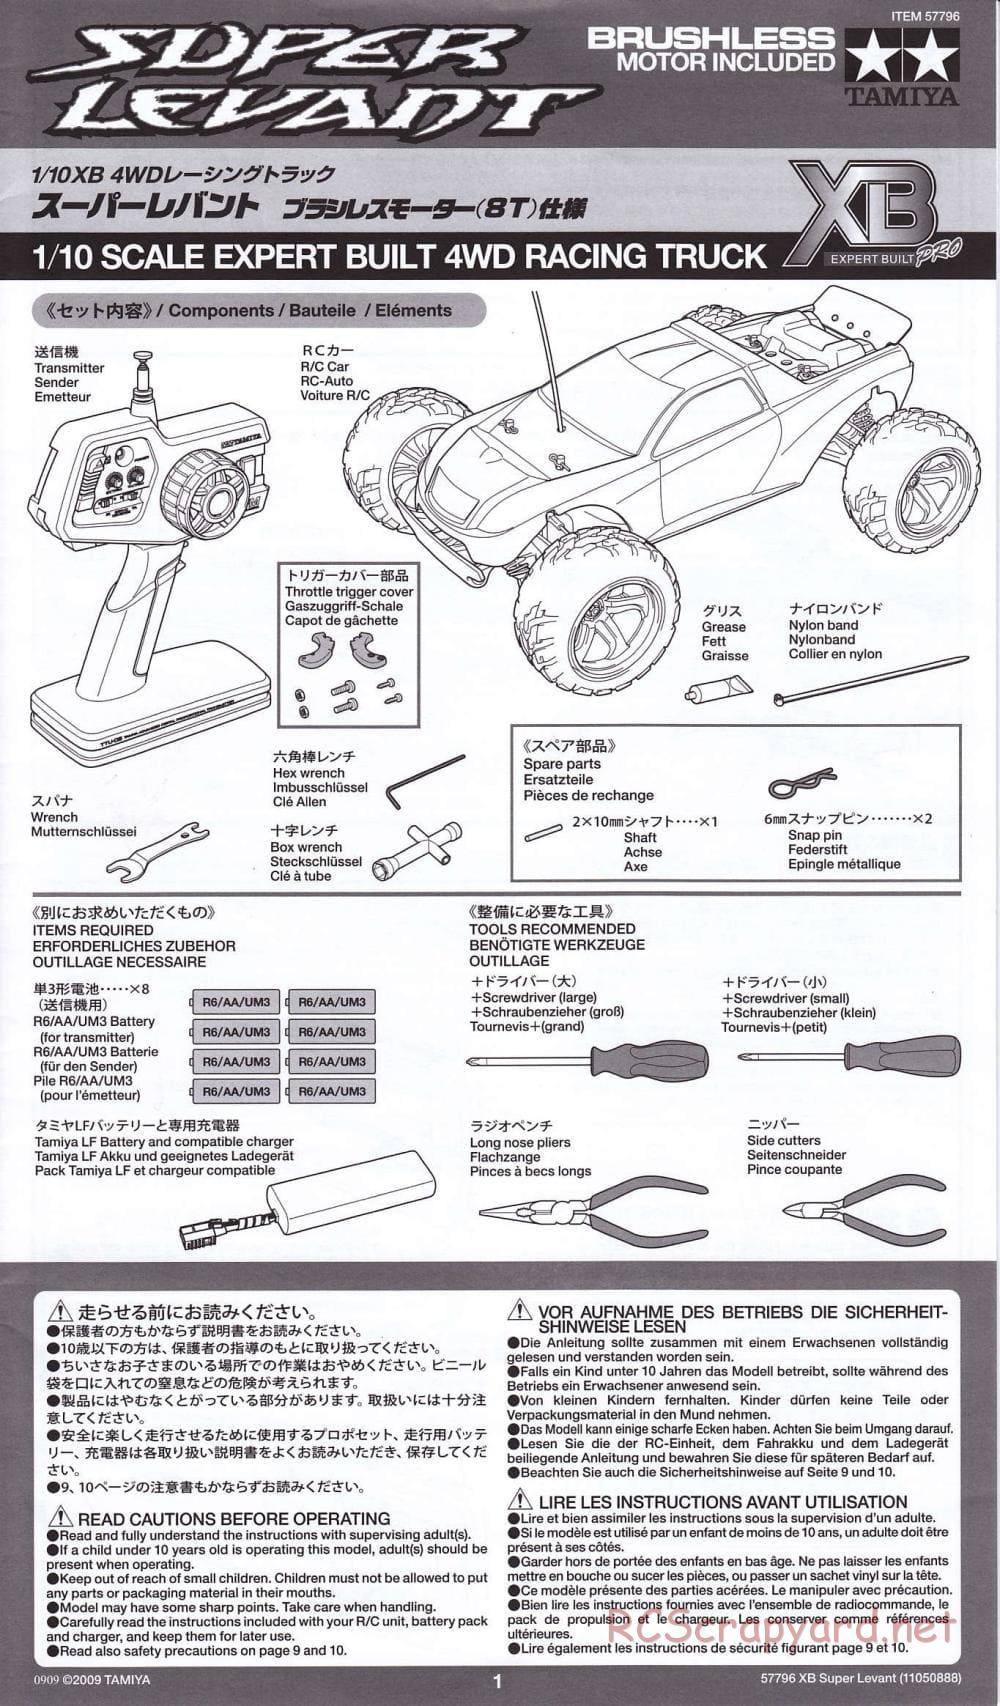 Tamiya - XB Super Levant - TB-01 Chassis - Manual - Page 1